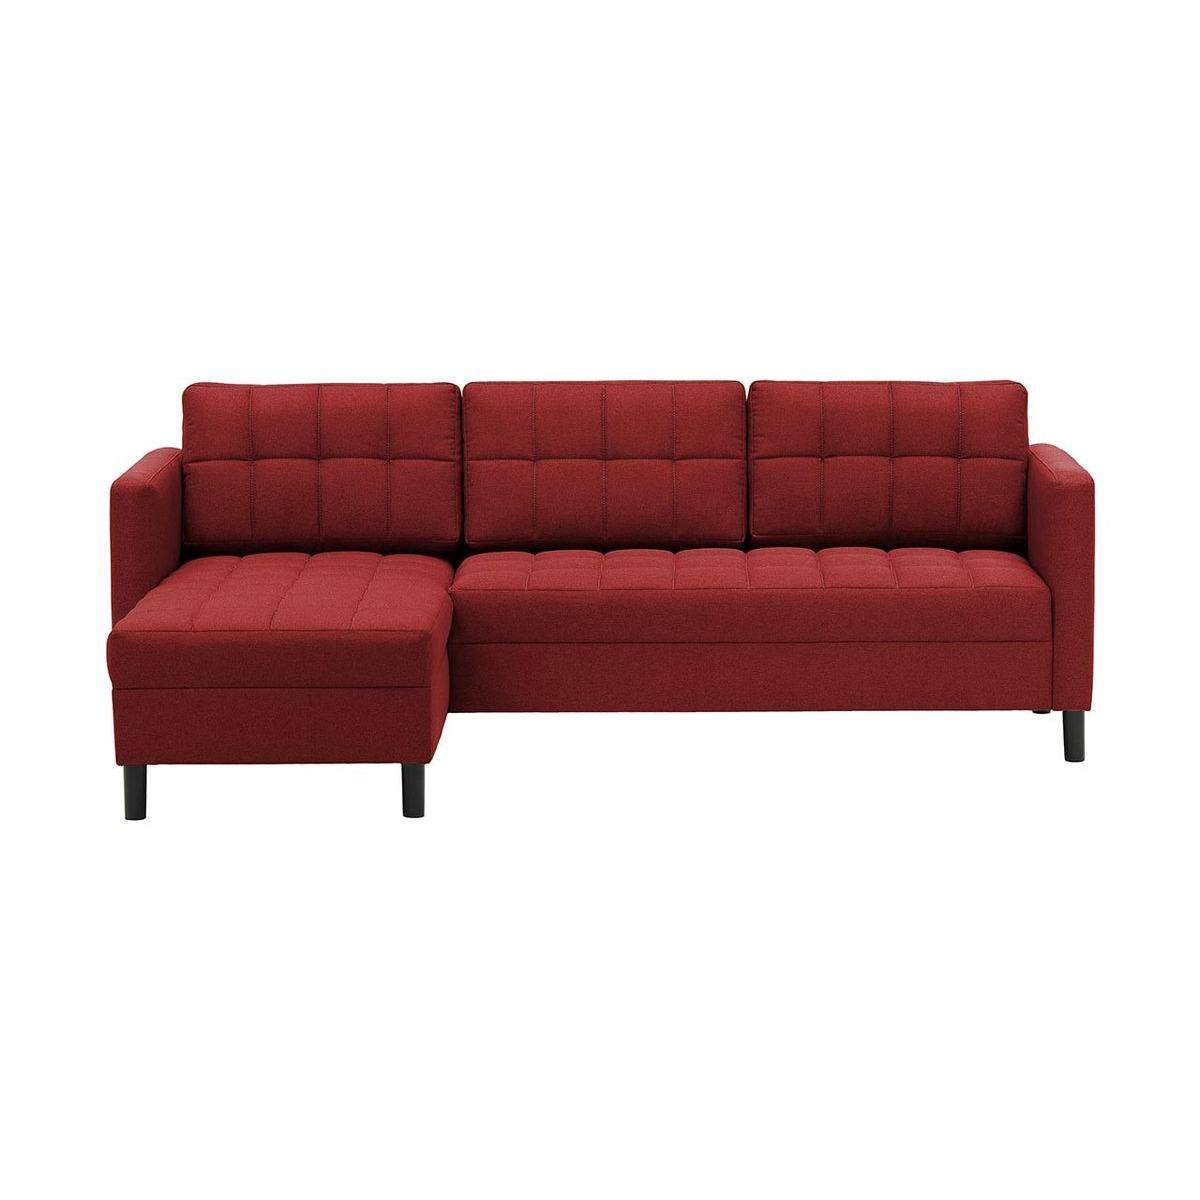 Ludo Universal Corner Sofa Bed, red - image 1